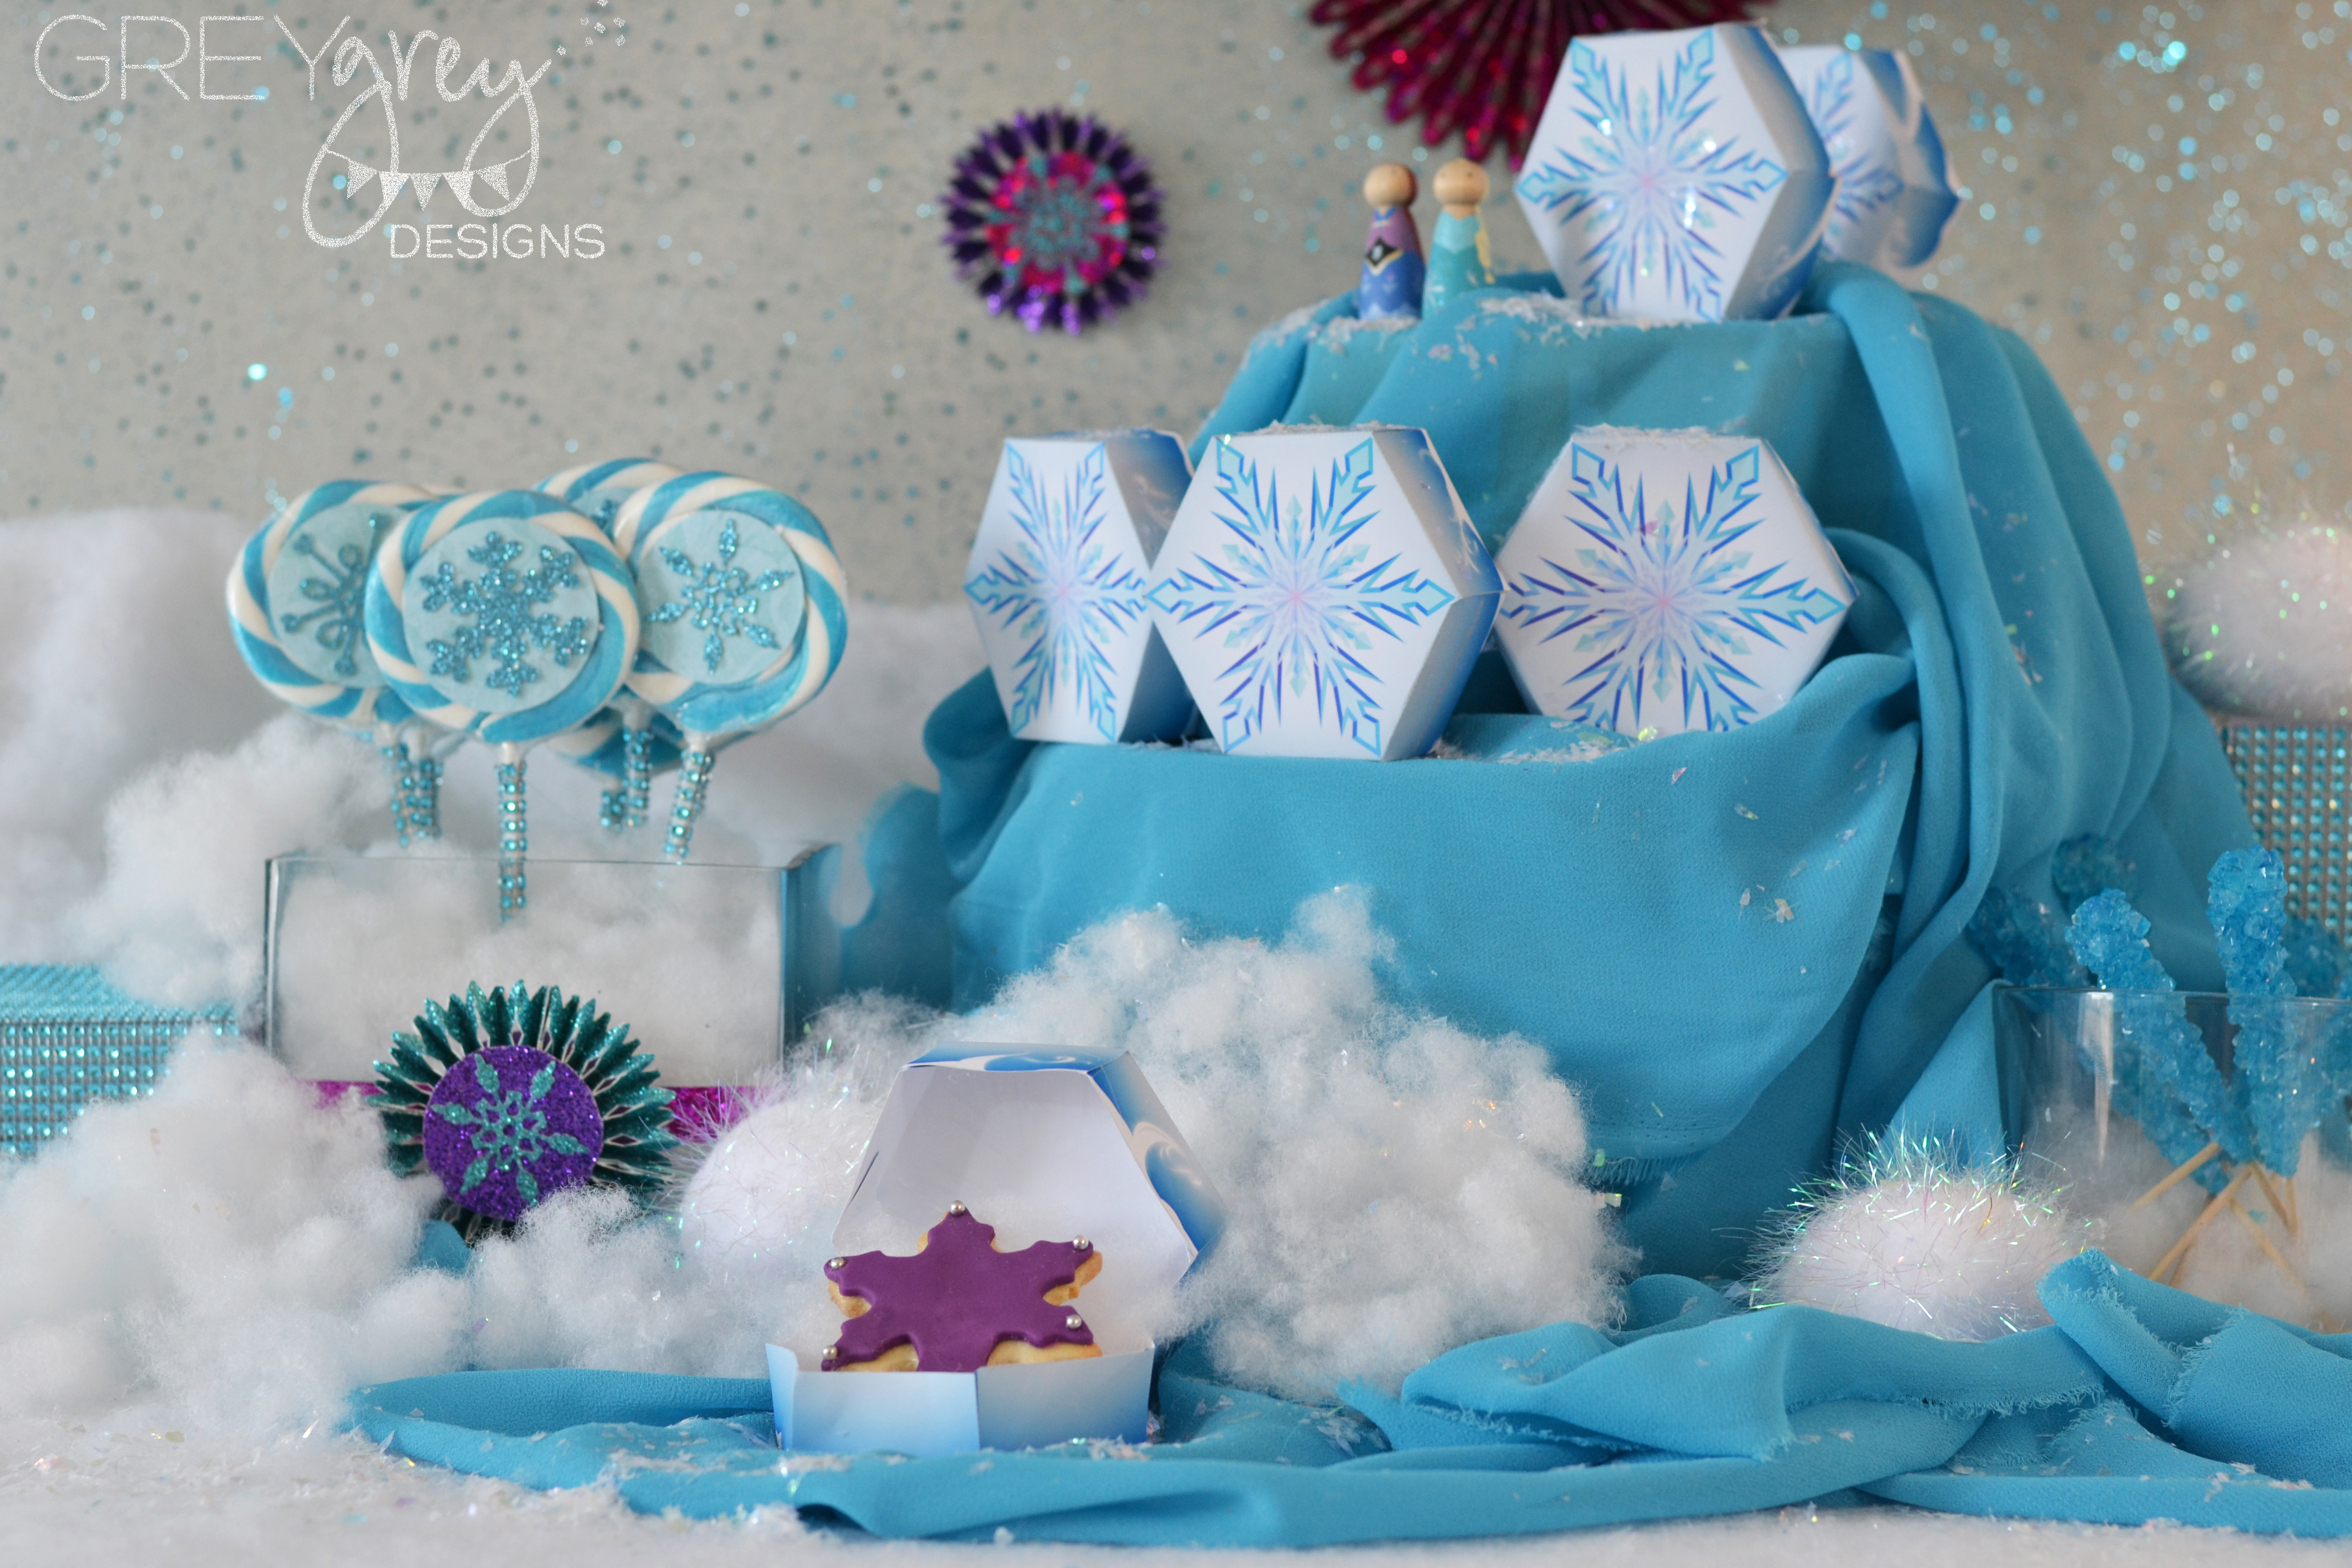 Winter party ideas - Easy DIY TABLE CENTERPIECE & decorations - Blue,  White, & Silver - FROZEN theme decor